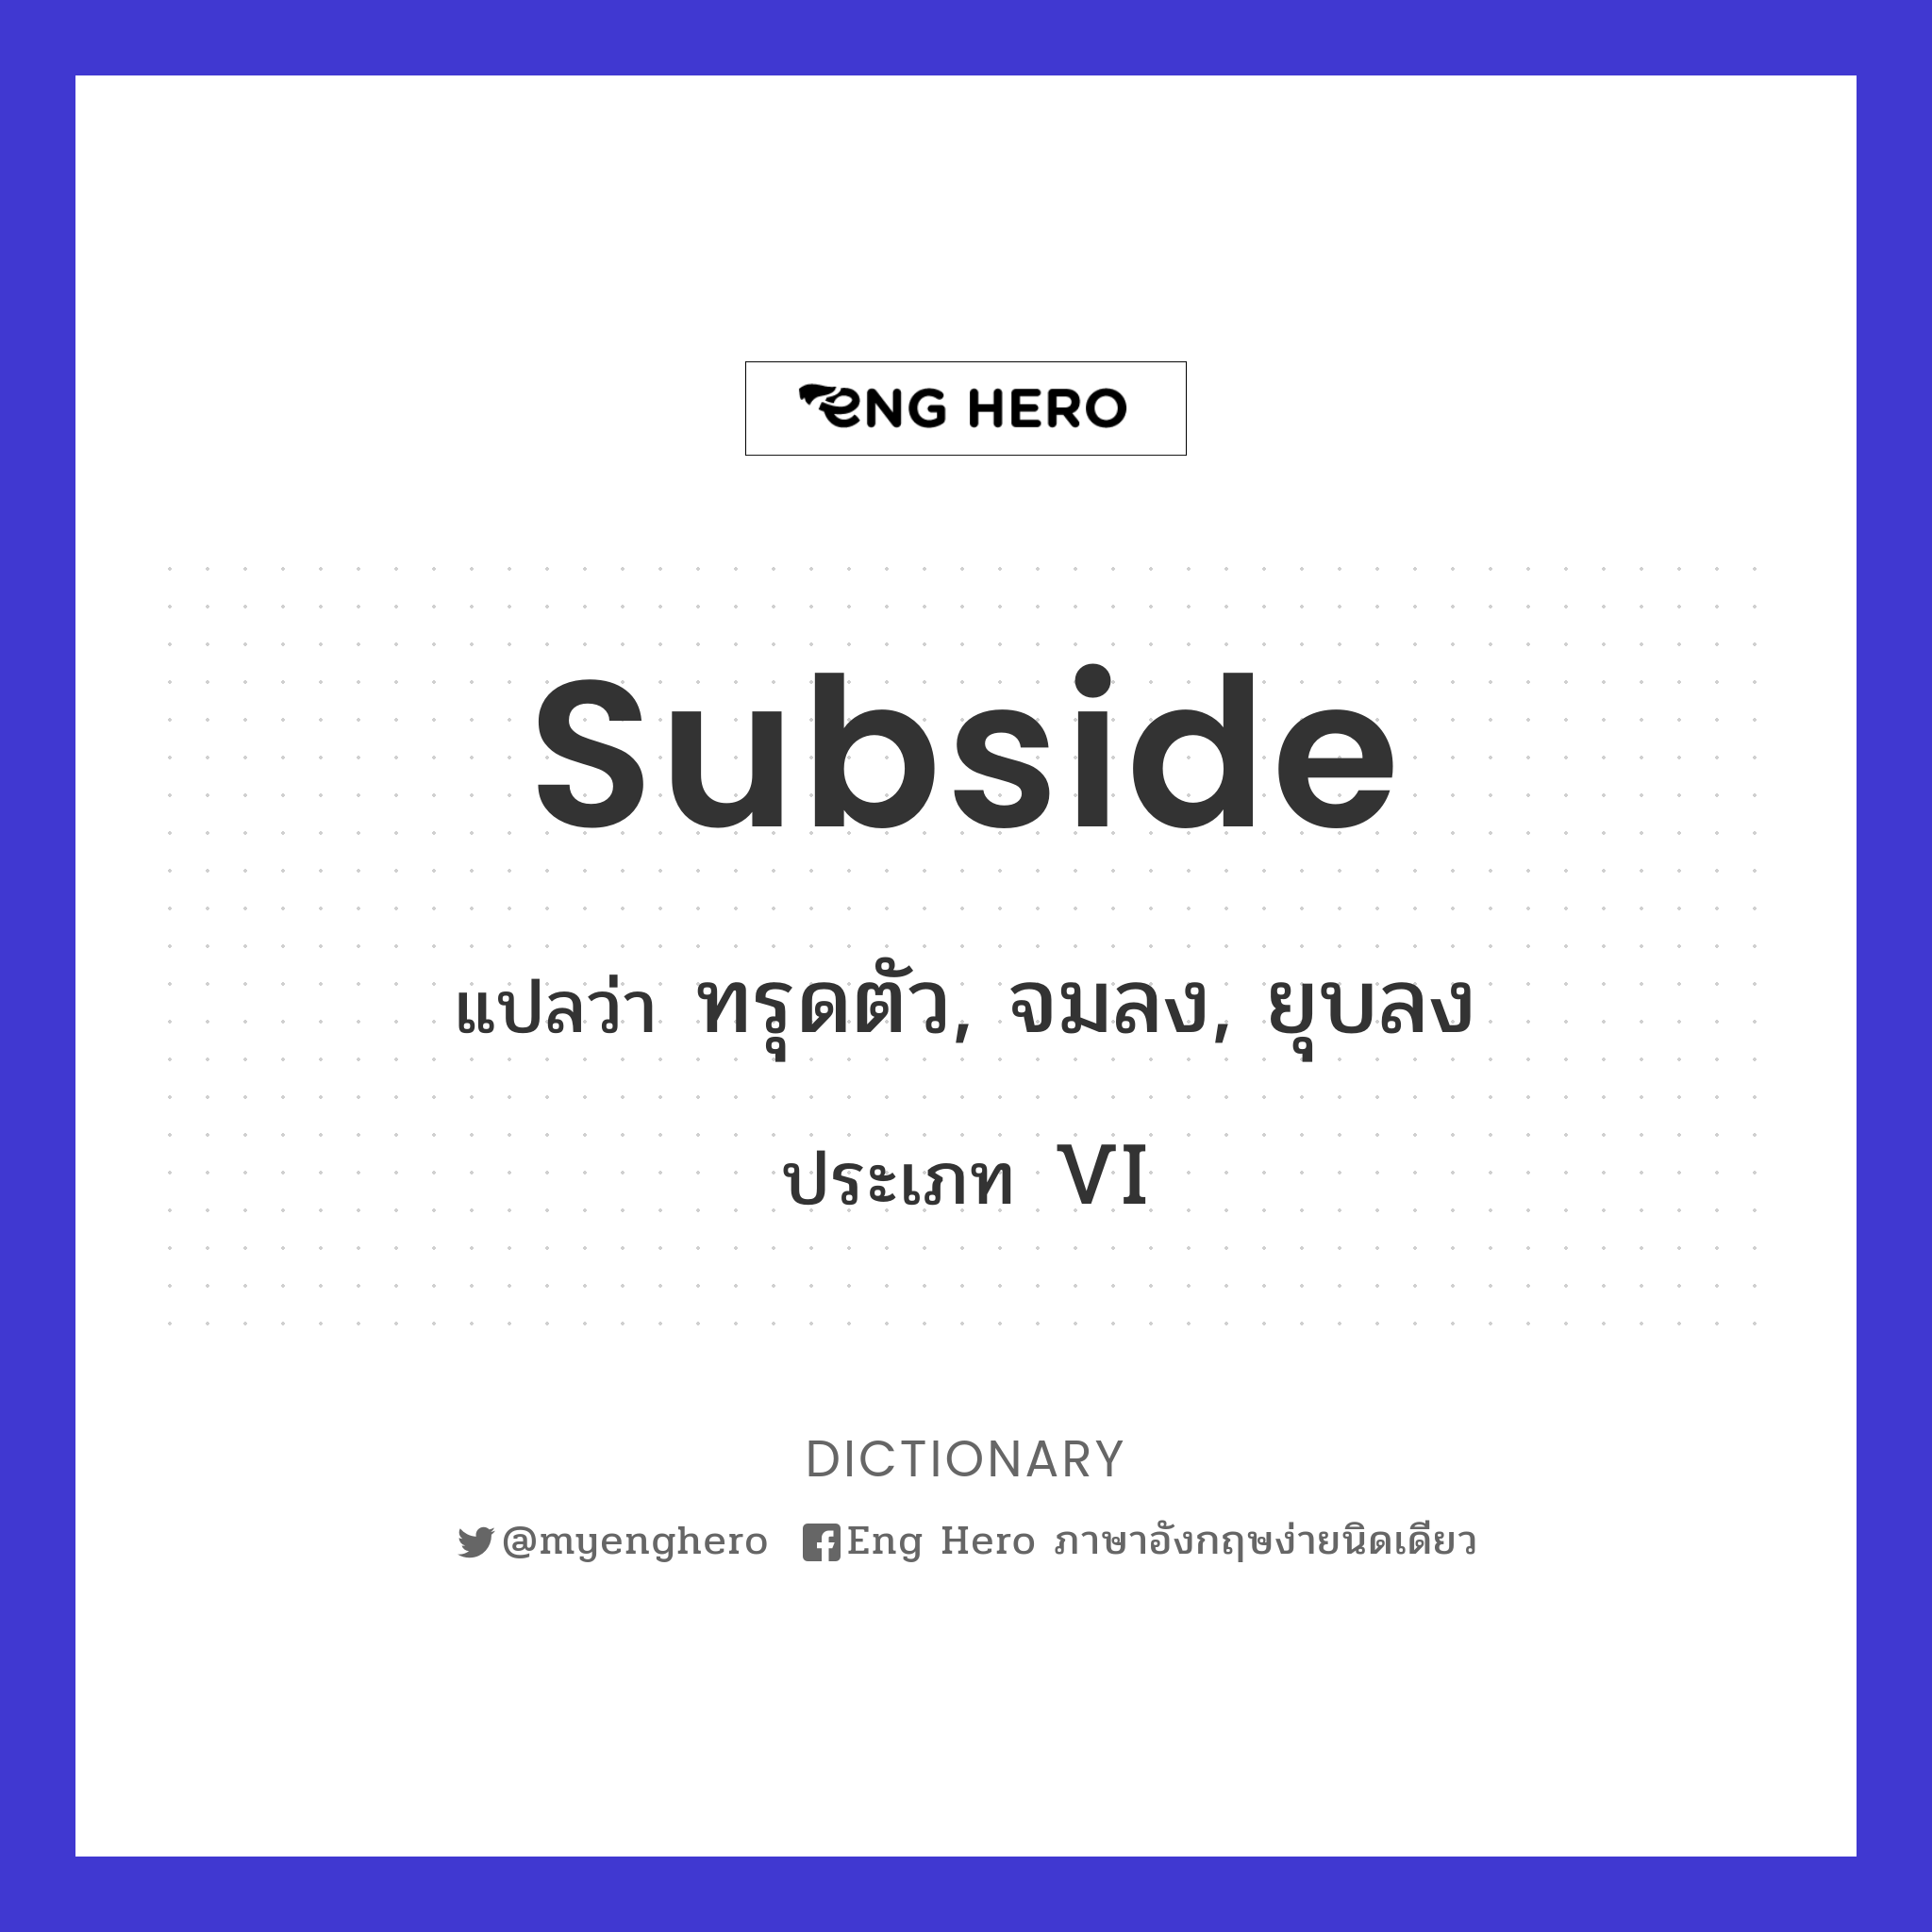 subside